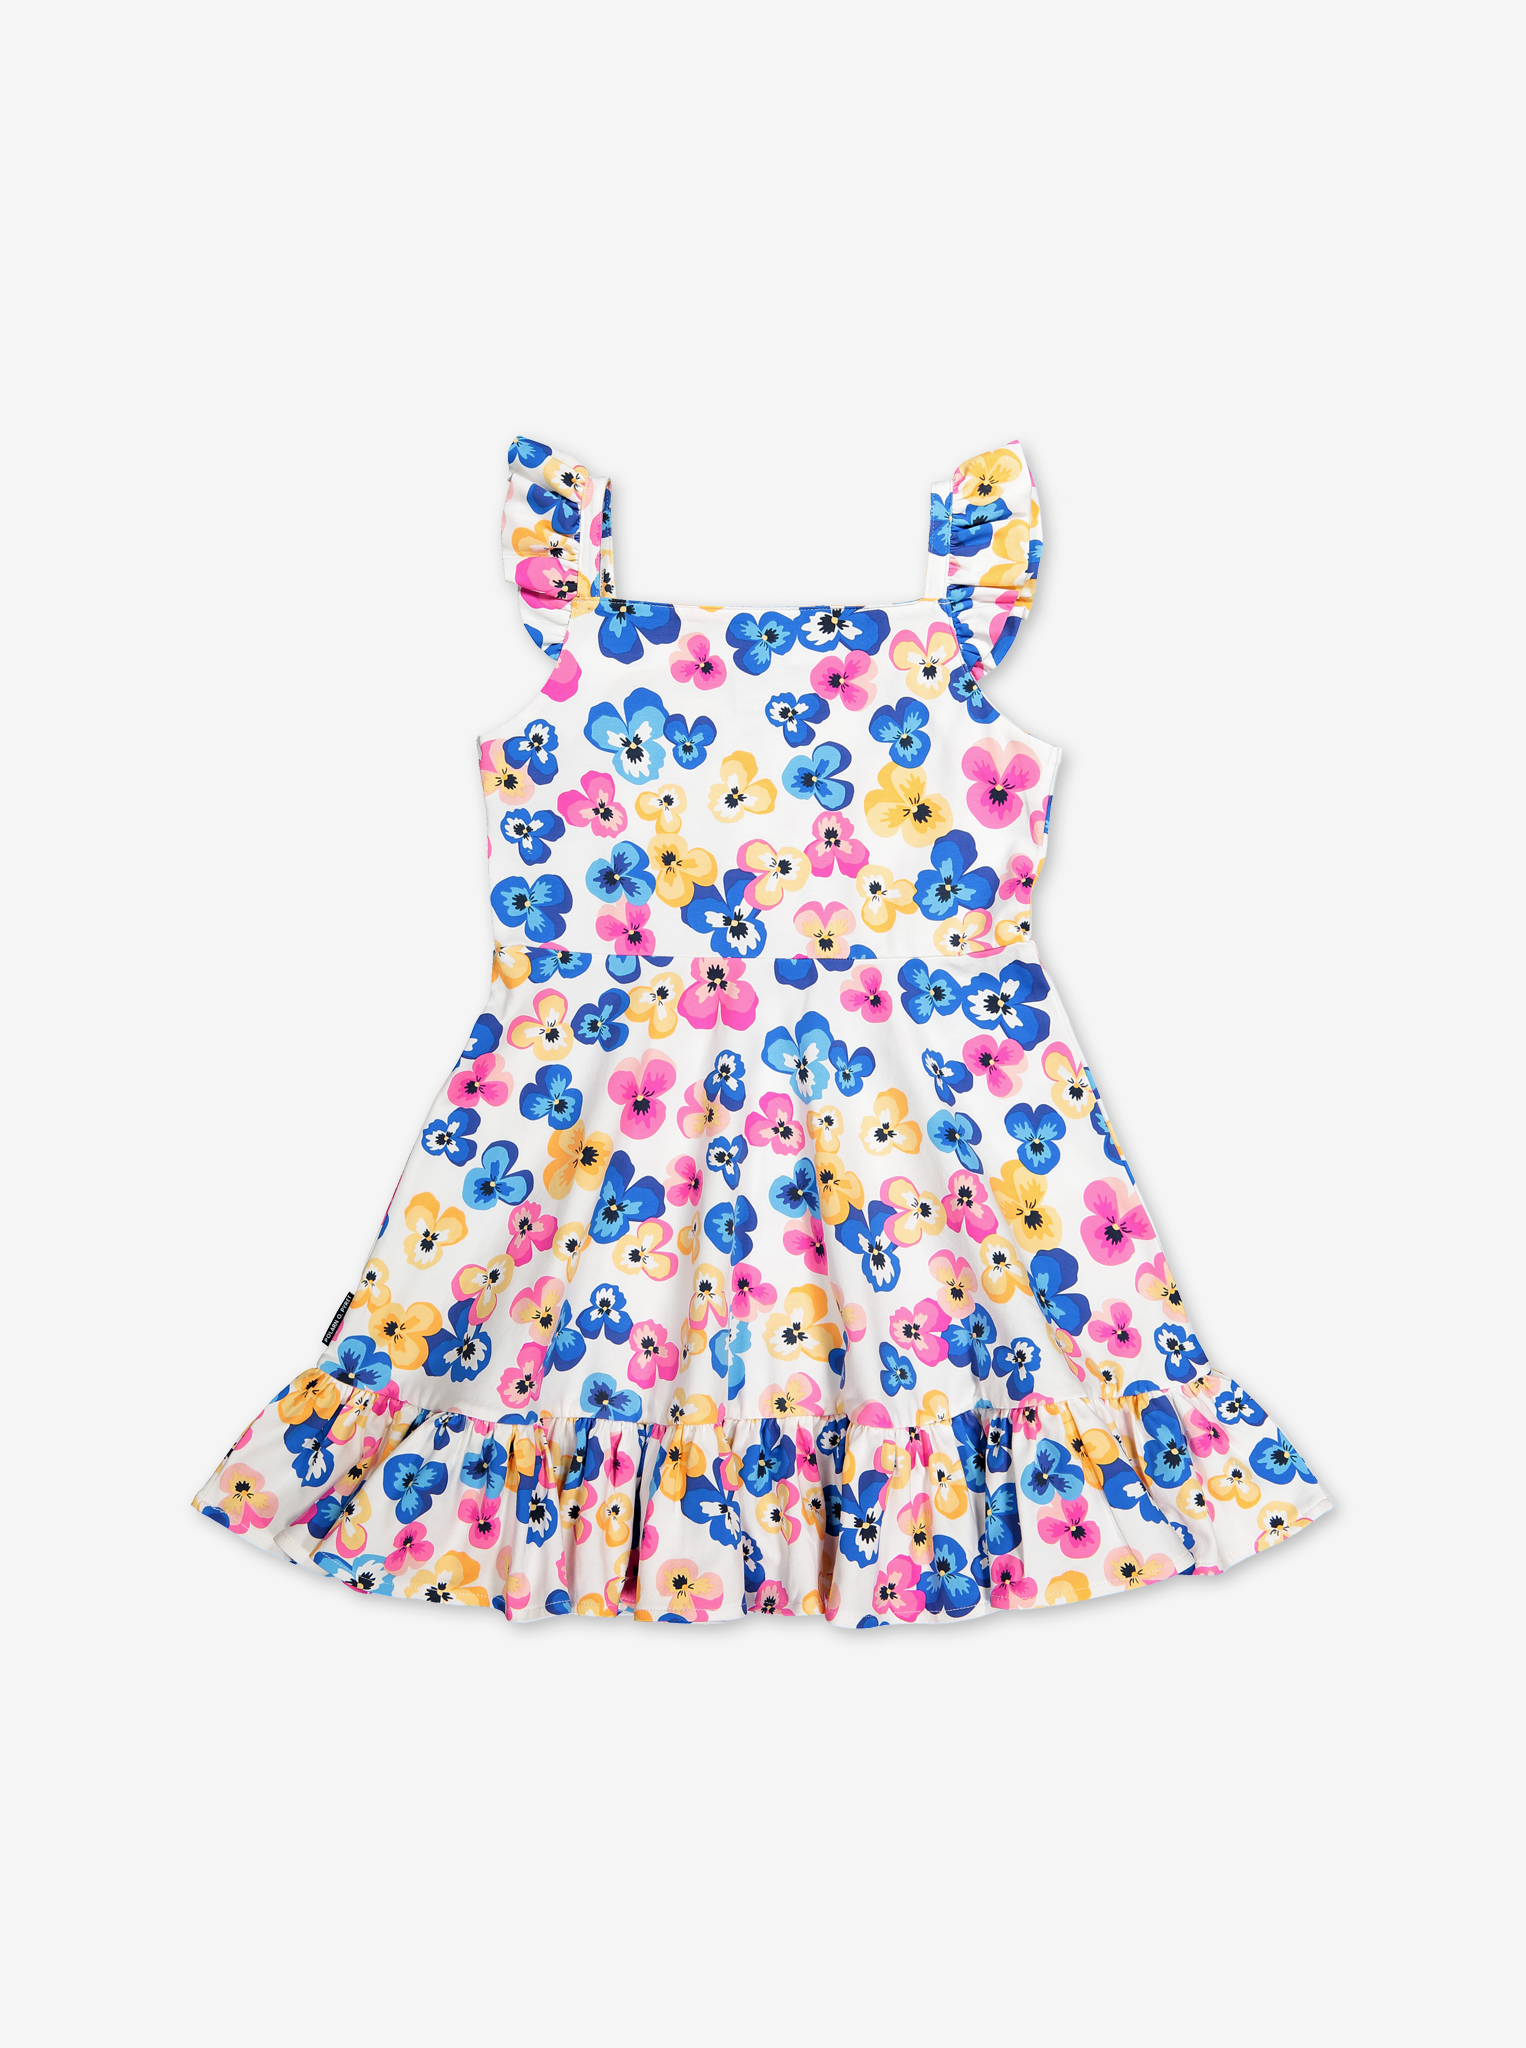 Floral Print Dress-Girl-1-6y-White